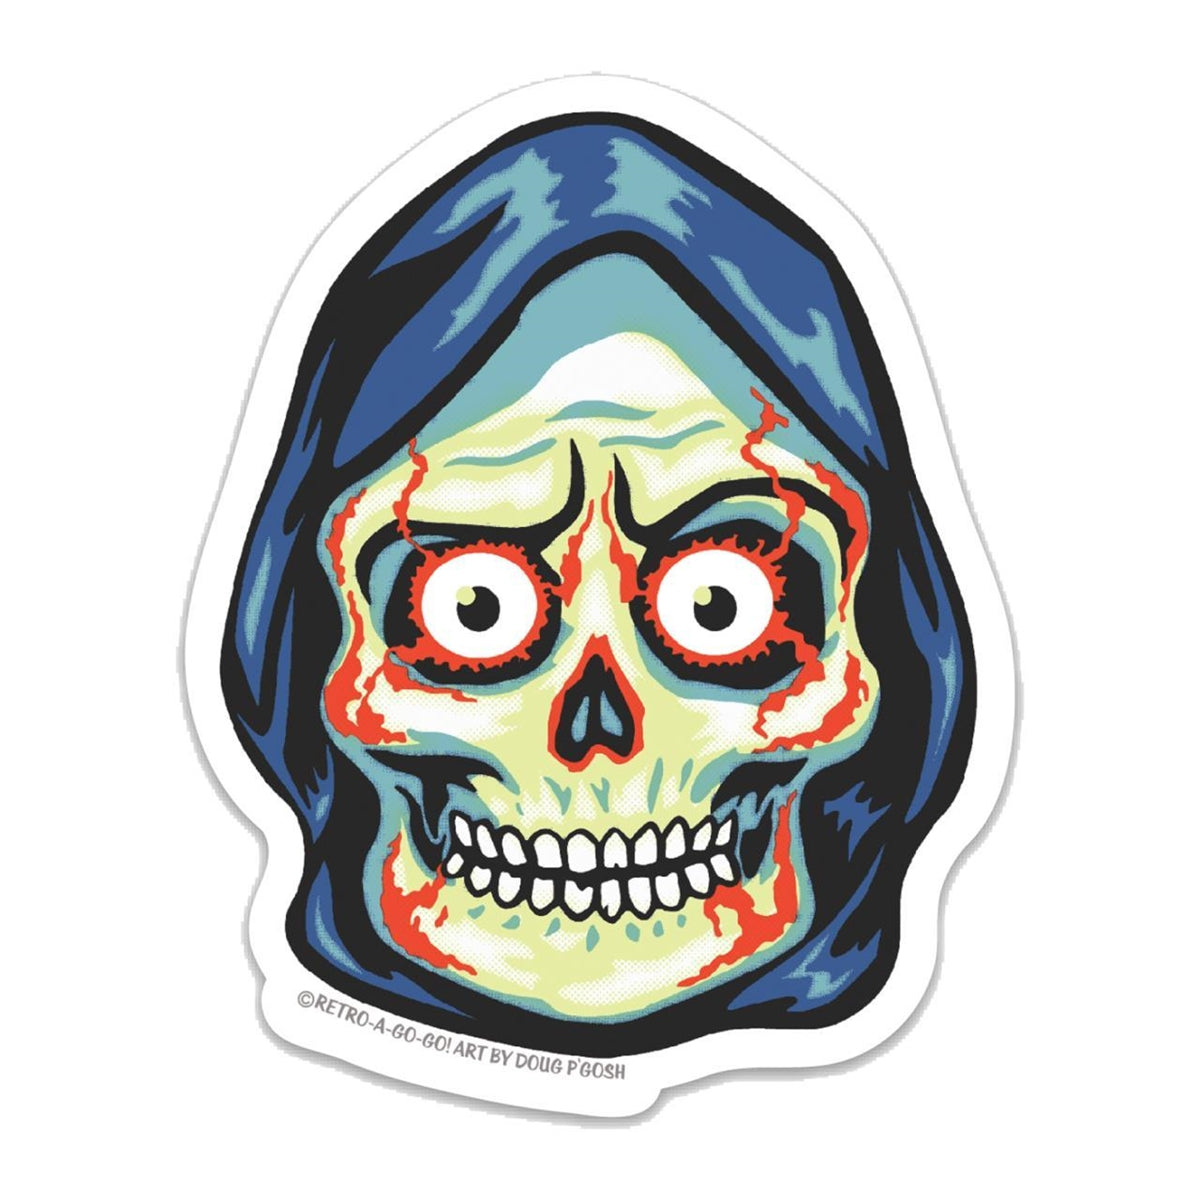 Vintage Halloween deco inspired "Beware, Death" grim reaper face die-cut vinyl sticker 3 1/4" x 4"